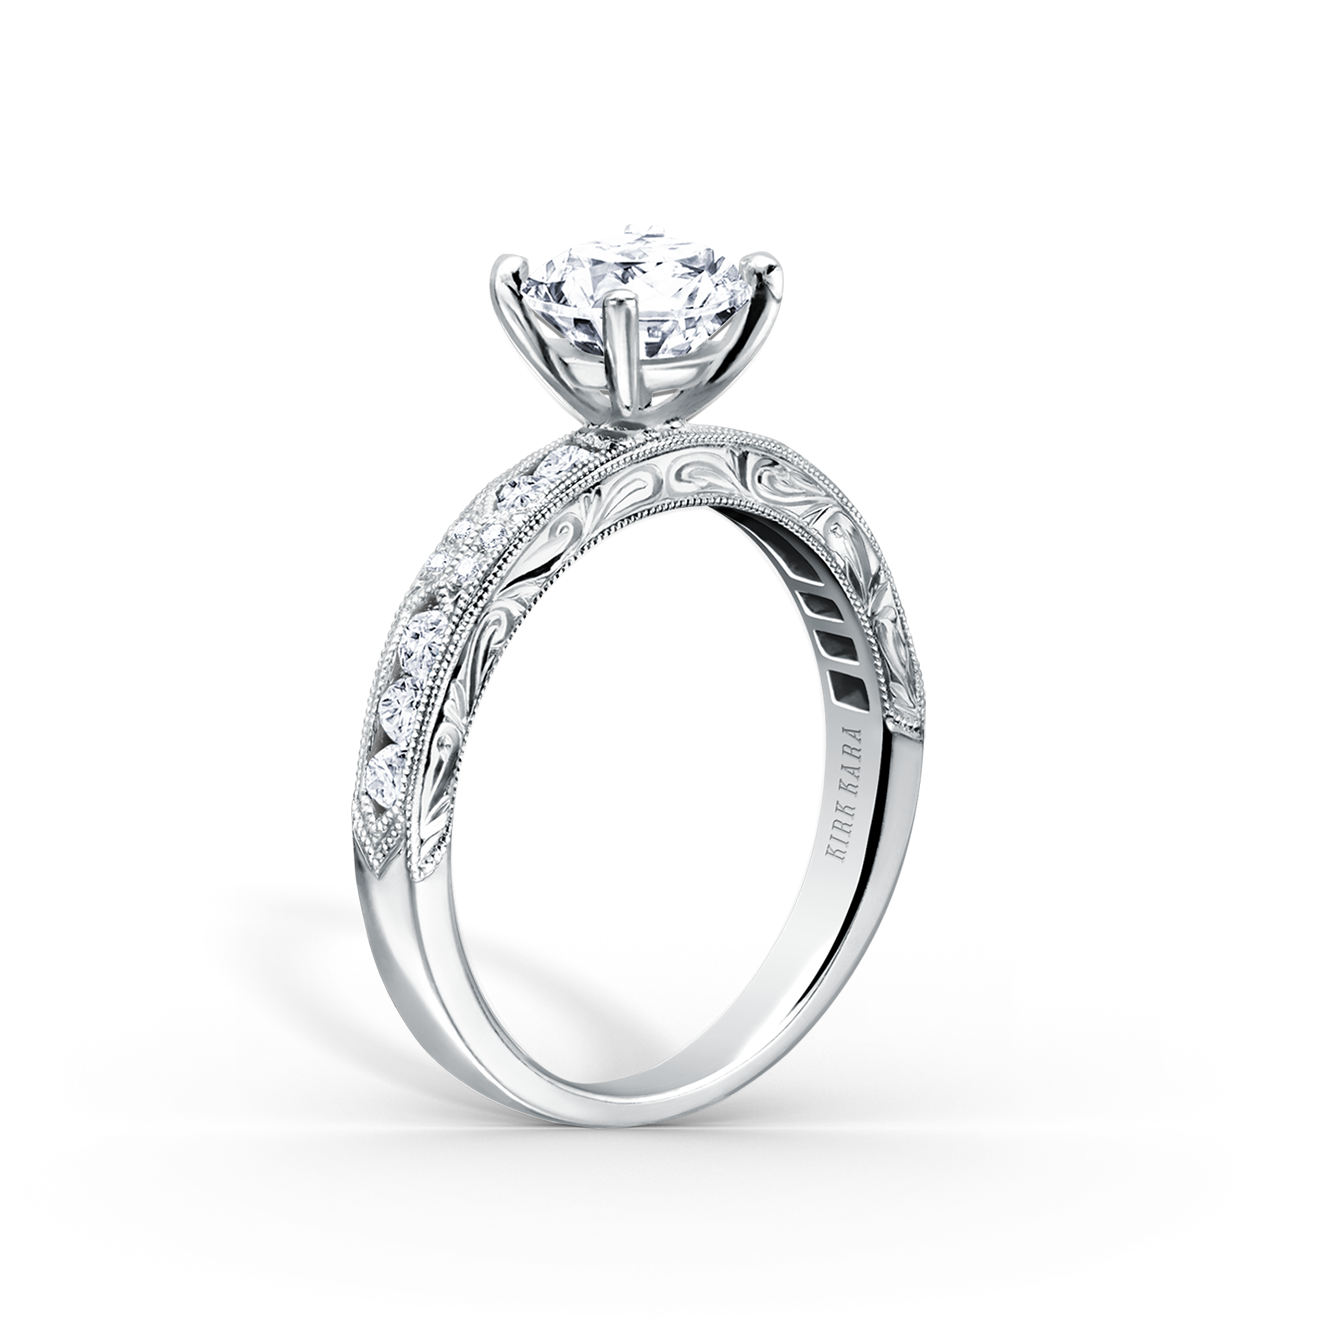 Channel Set Artful Diamond Engagement Ring